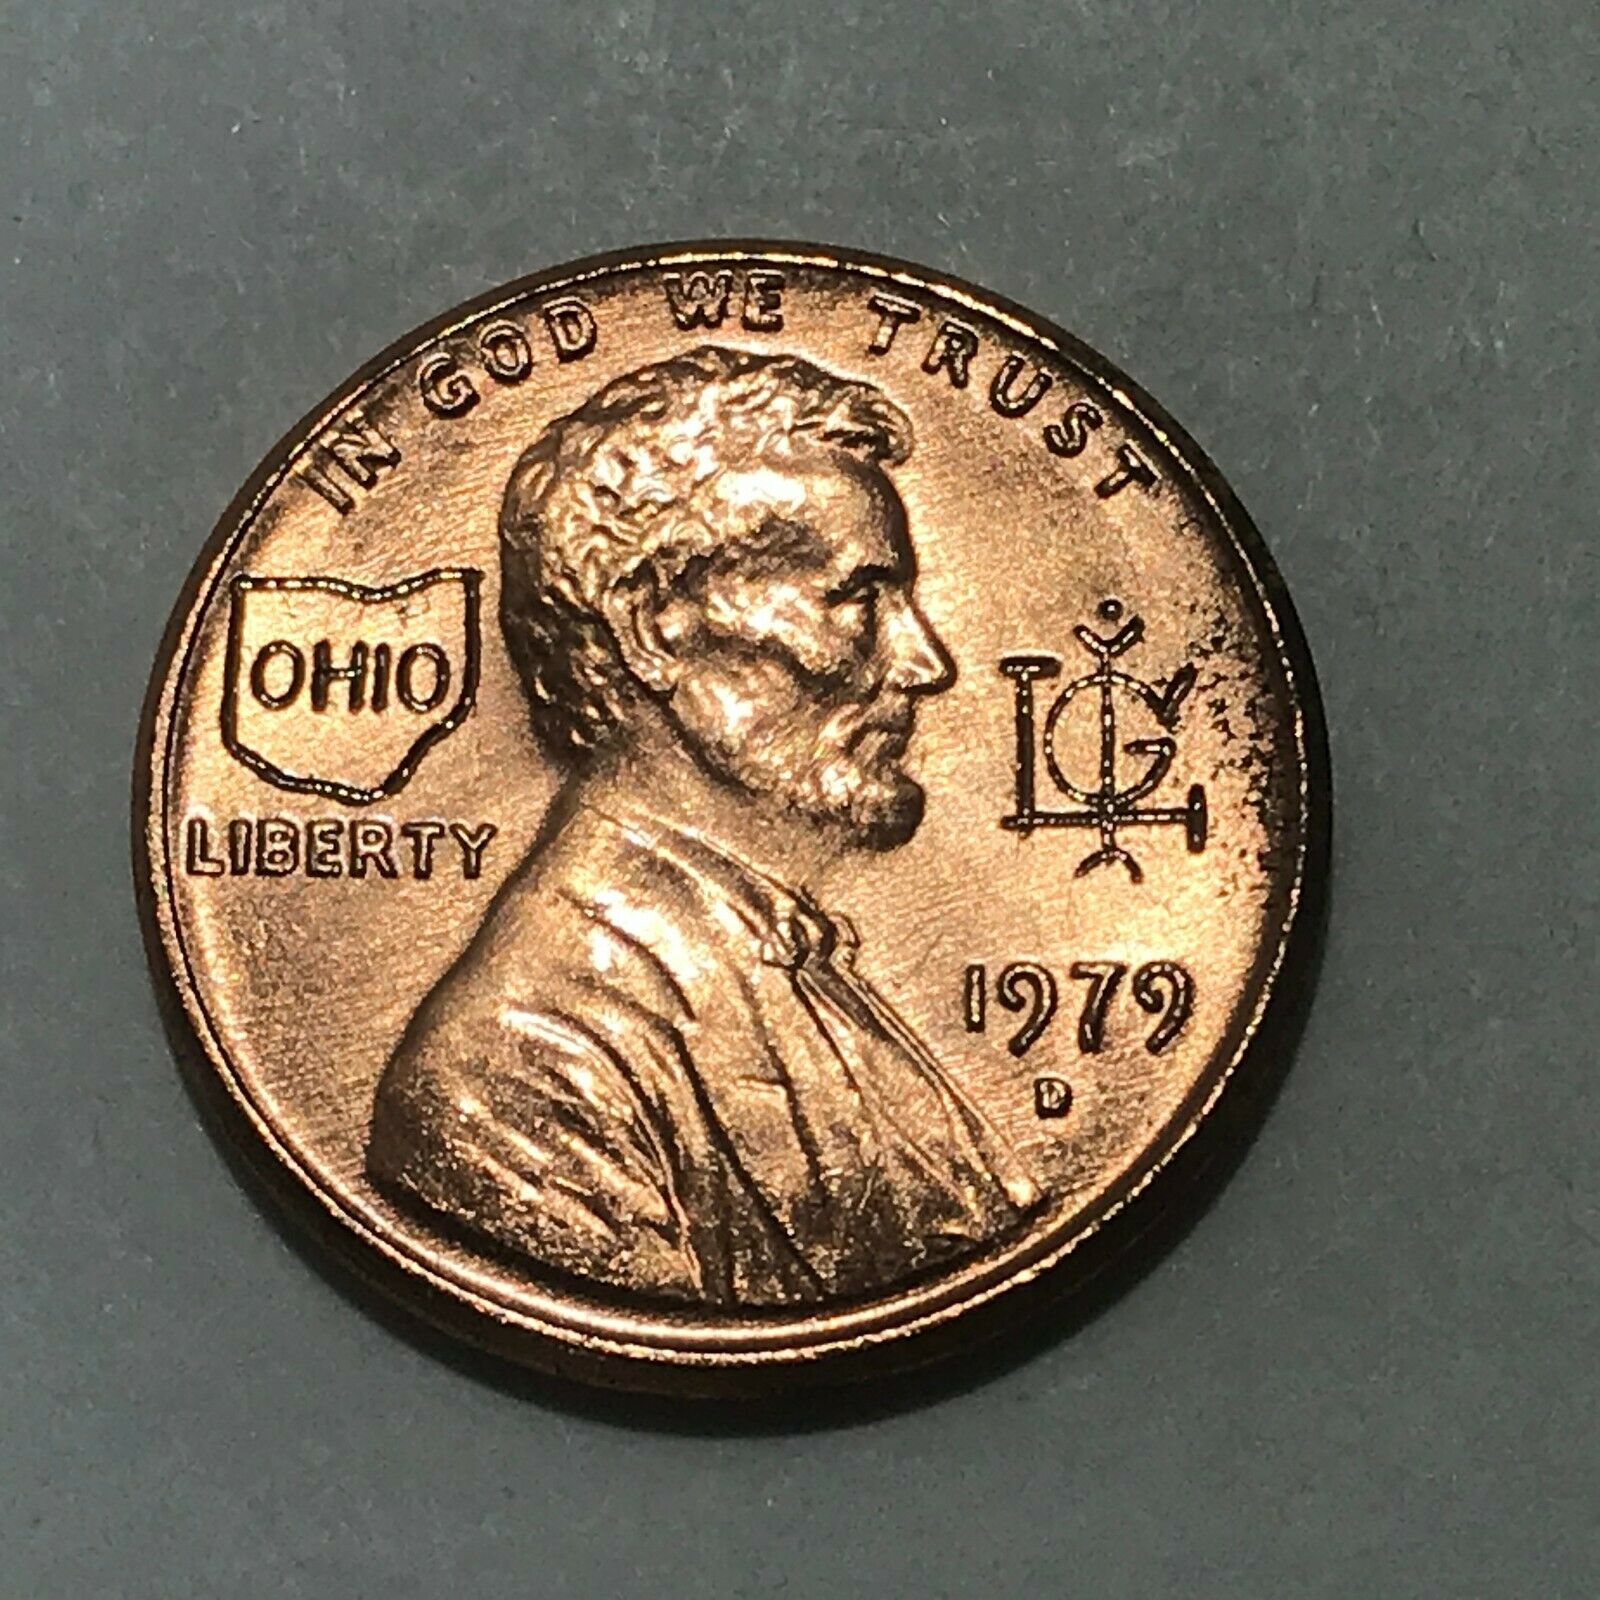 Ohio Souvenir Penny